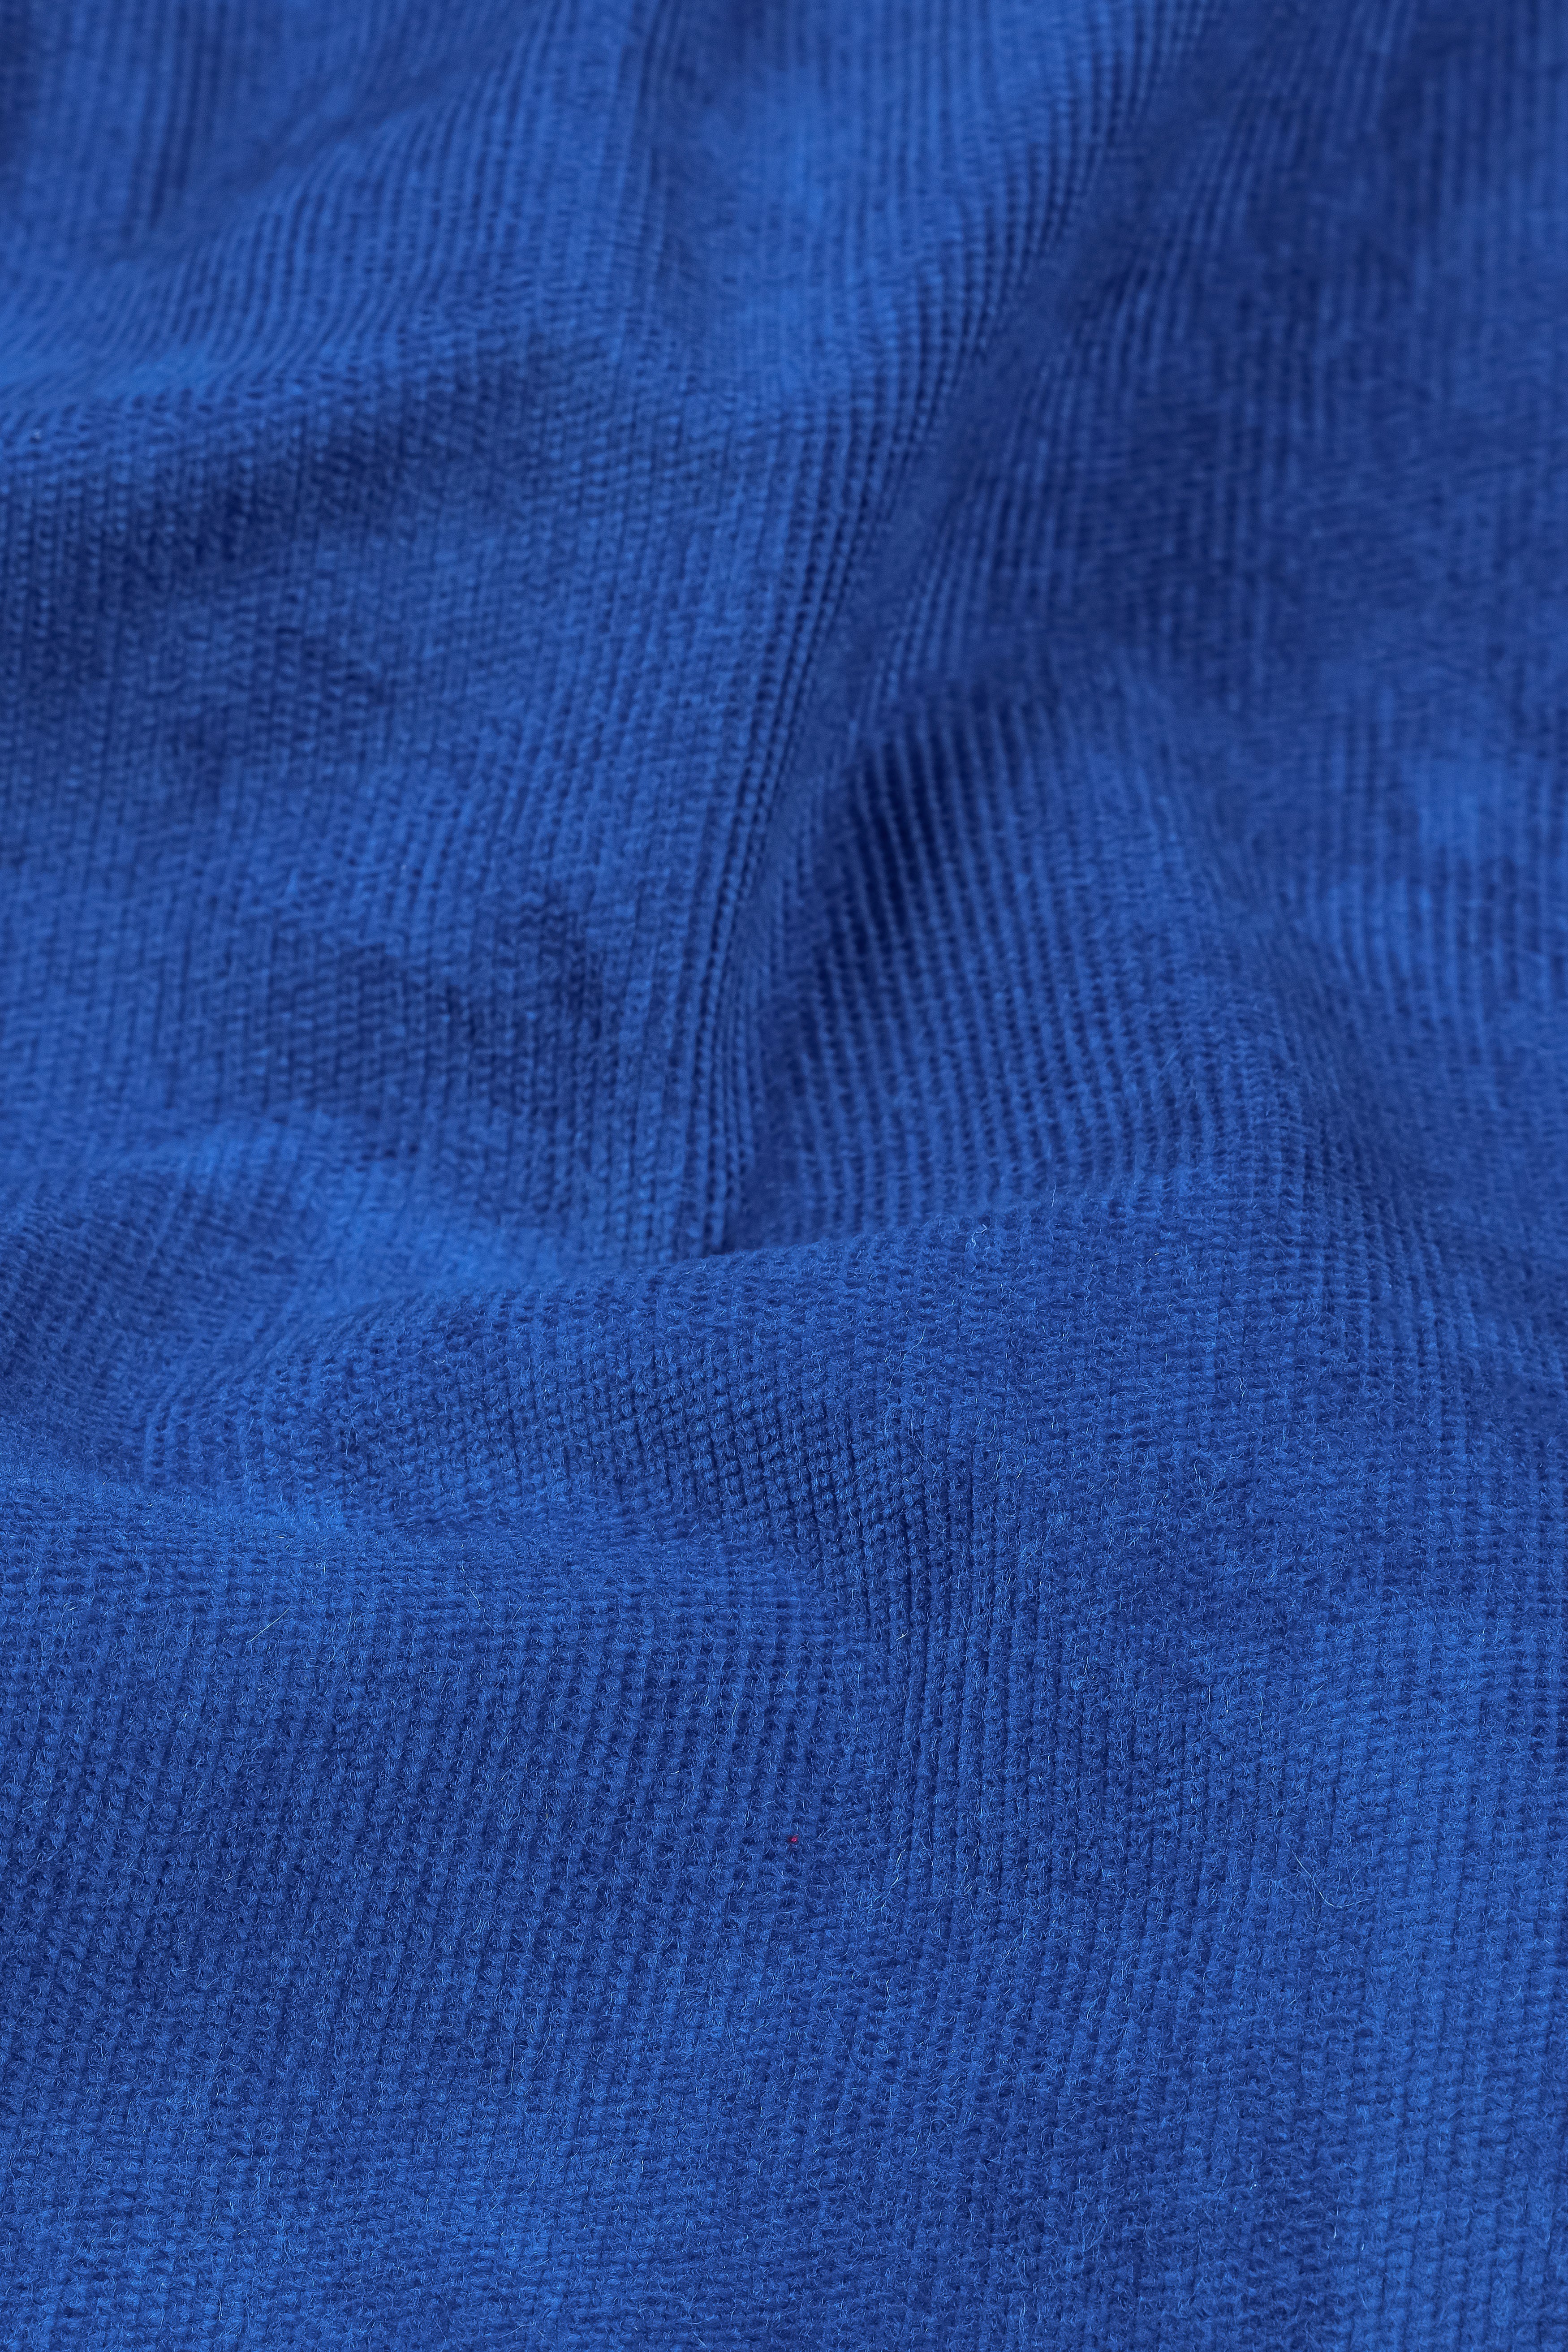 Cobalt Blue Cross Placket Bandhgala/Mandarin Corduroy Premium Cotton Designer Blazer